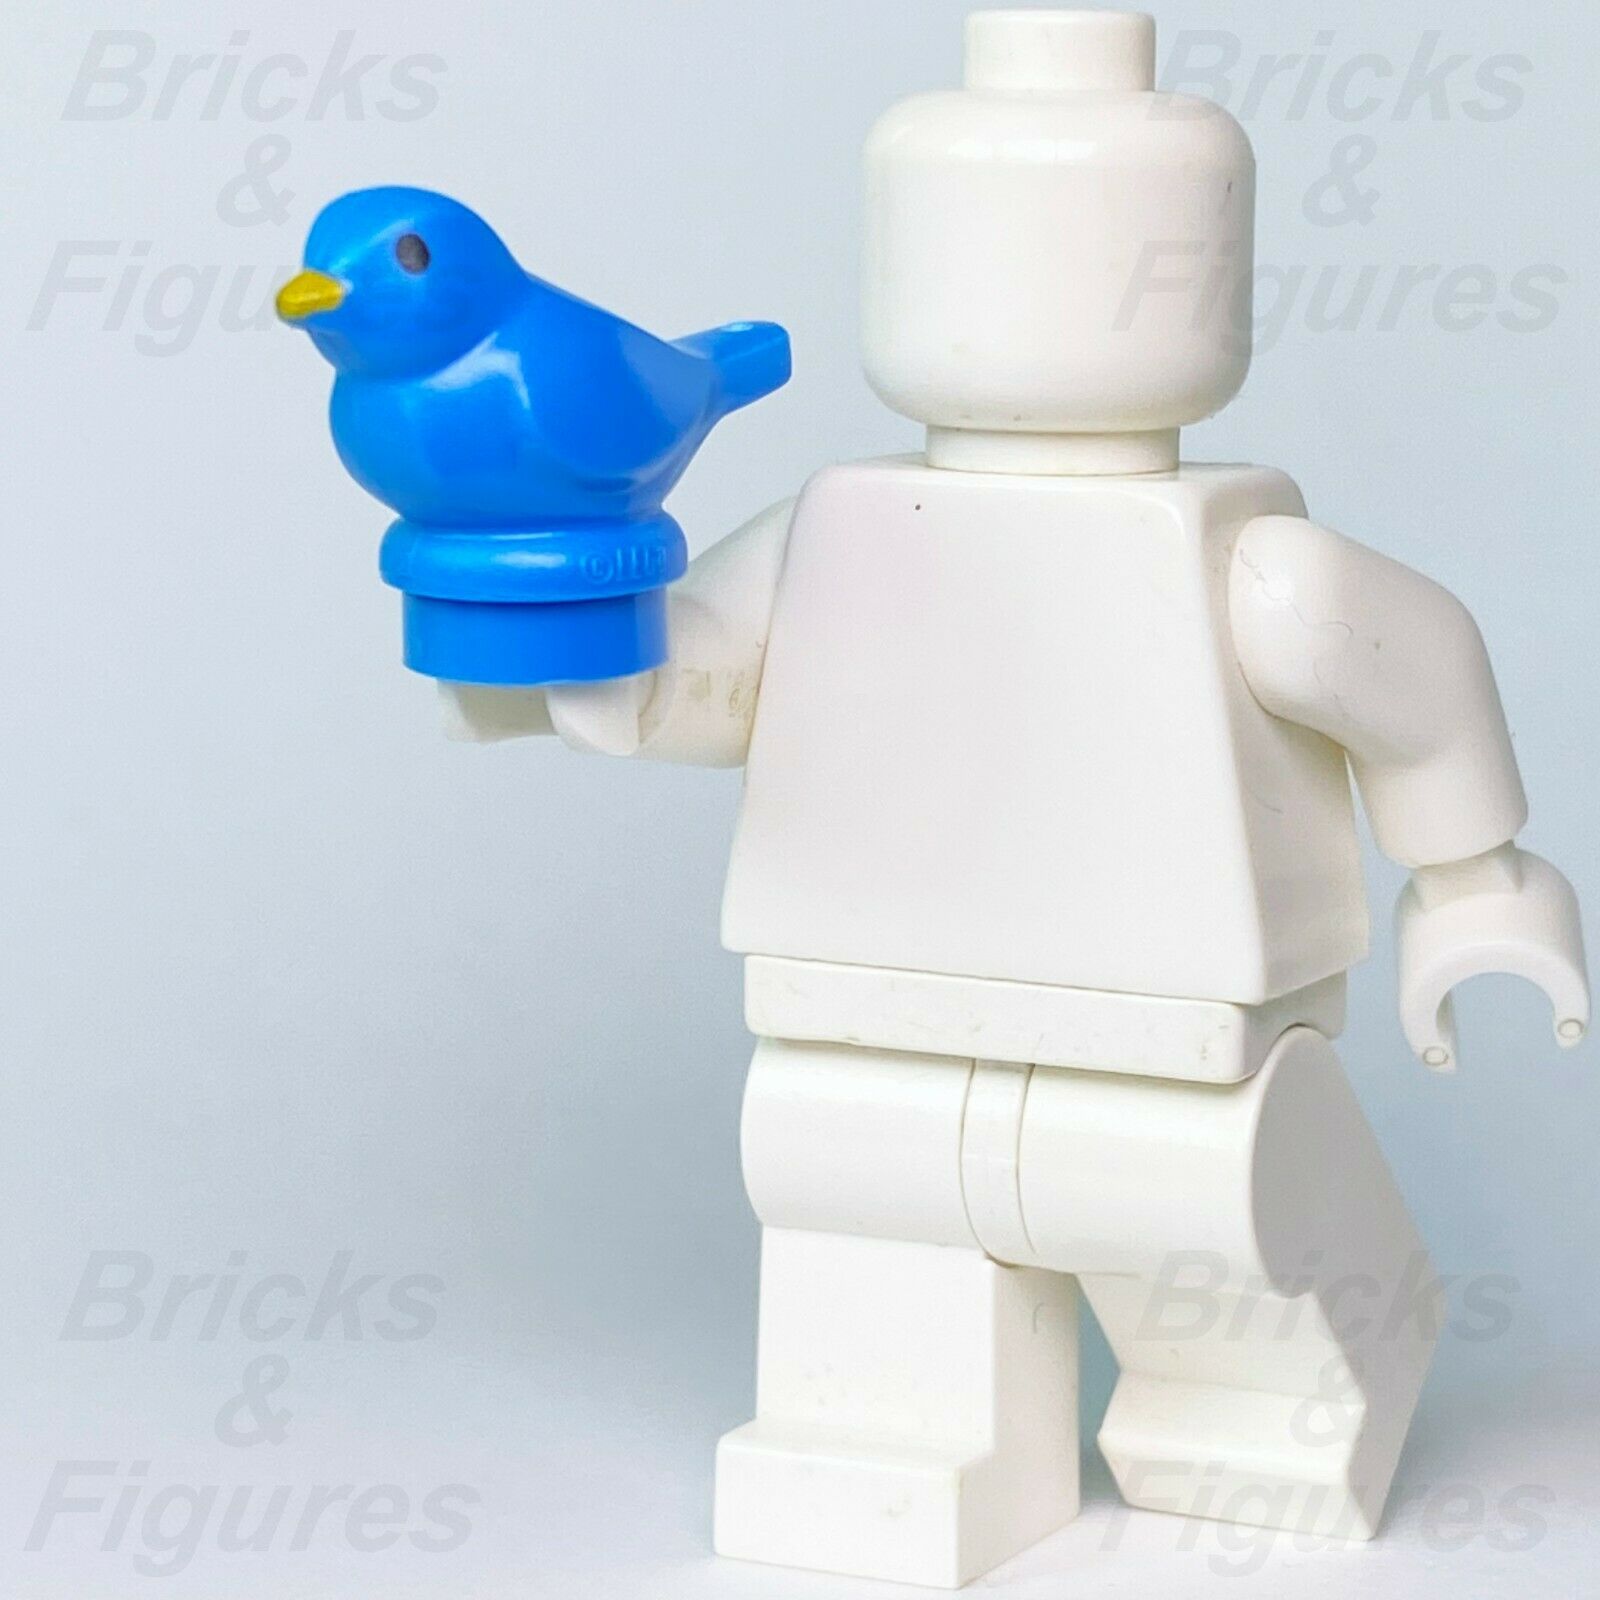 Town City Modular Buildings LEGO® Small Blue Bird with Black Eyes Animal 10270 - Bricks & Figures